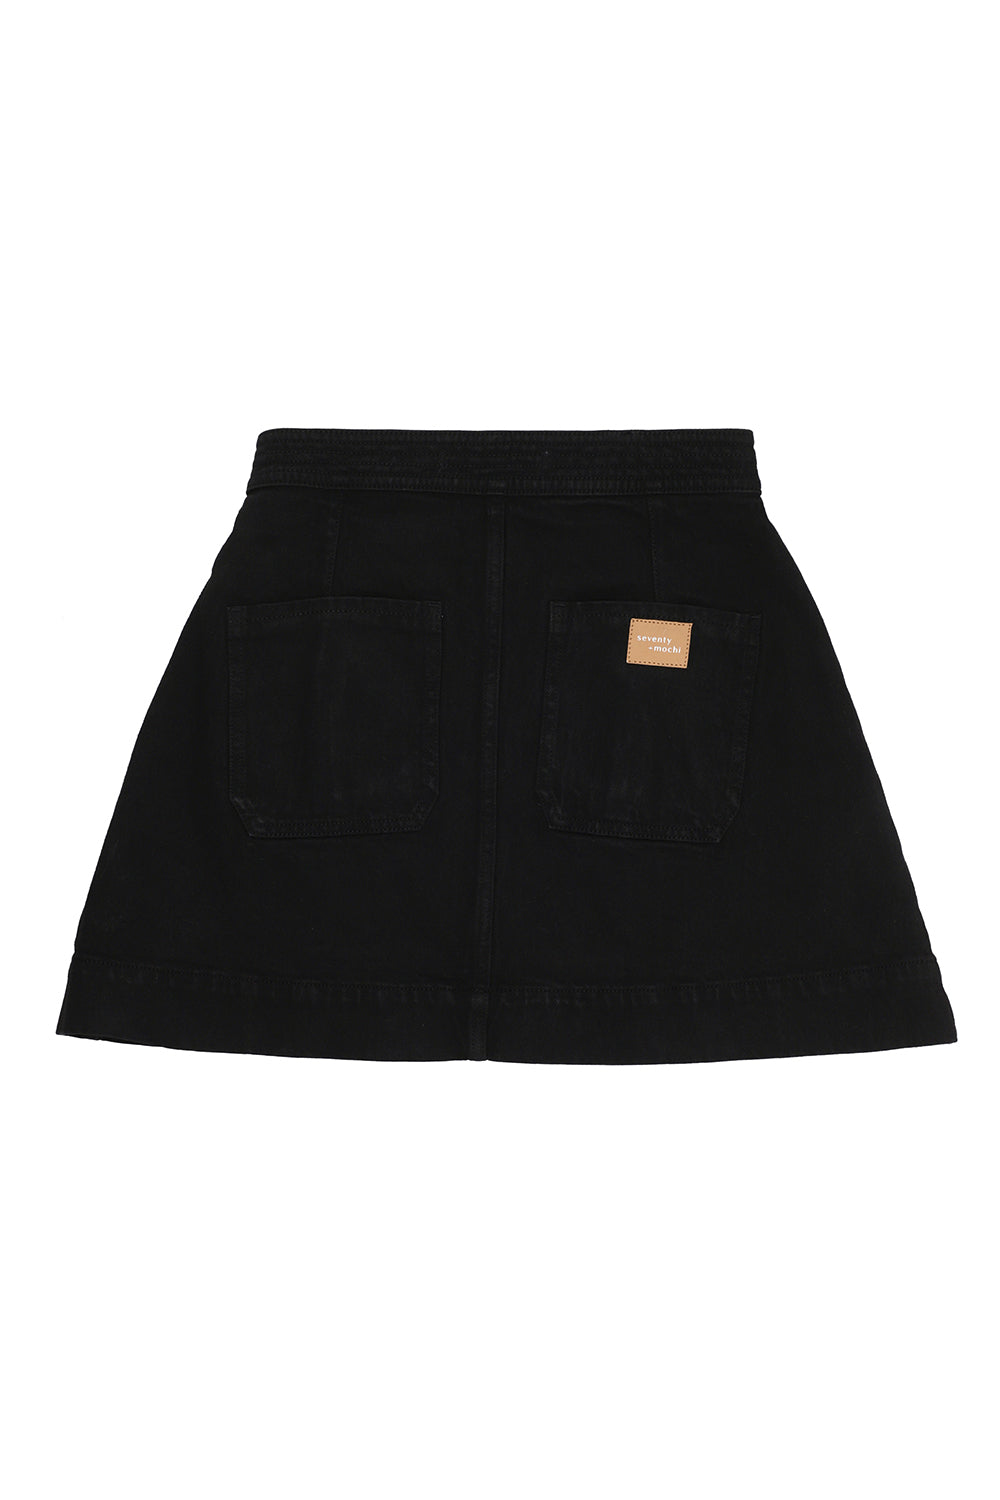 Marie Sailor Skirt in Black Denim - seventy + mochi